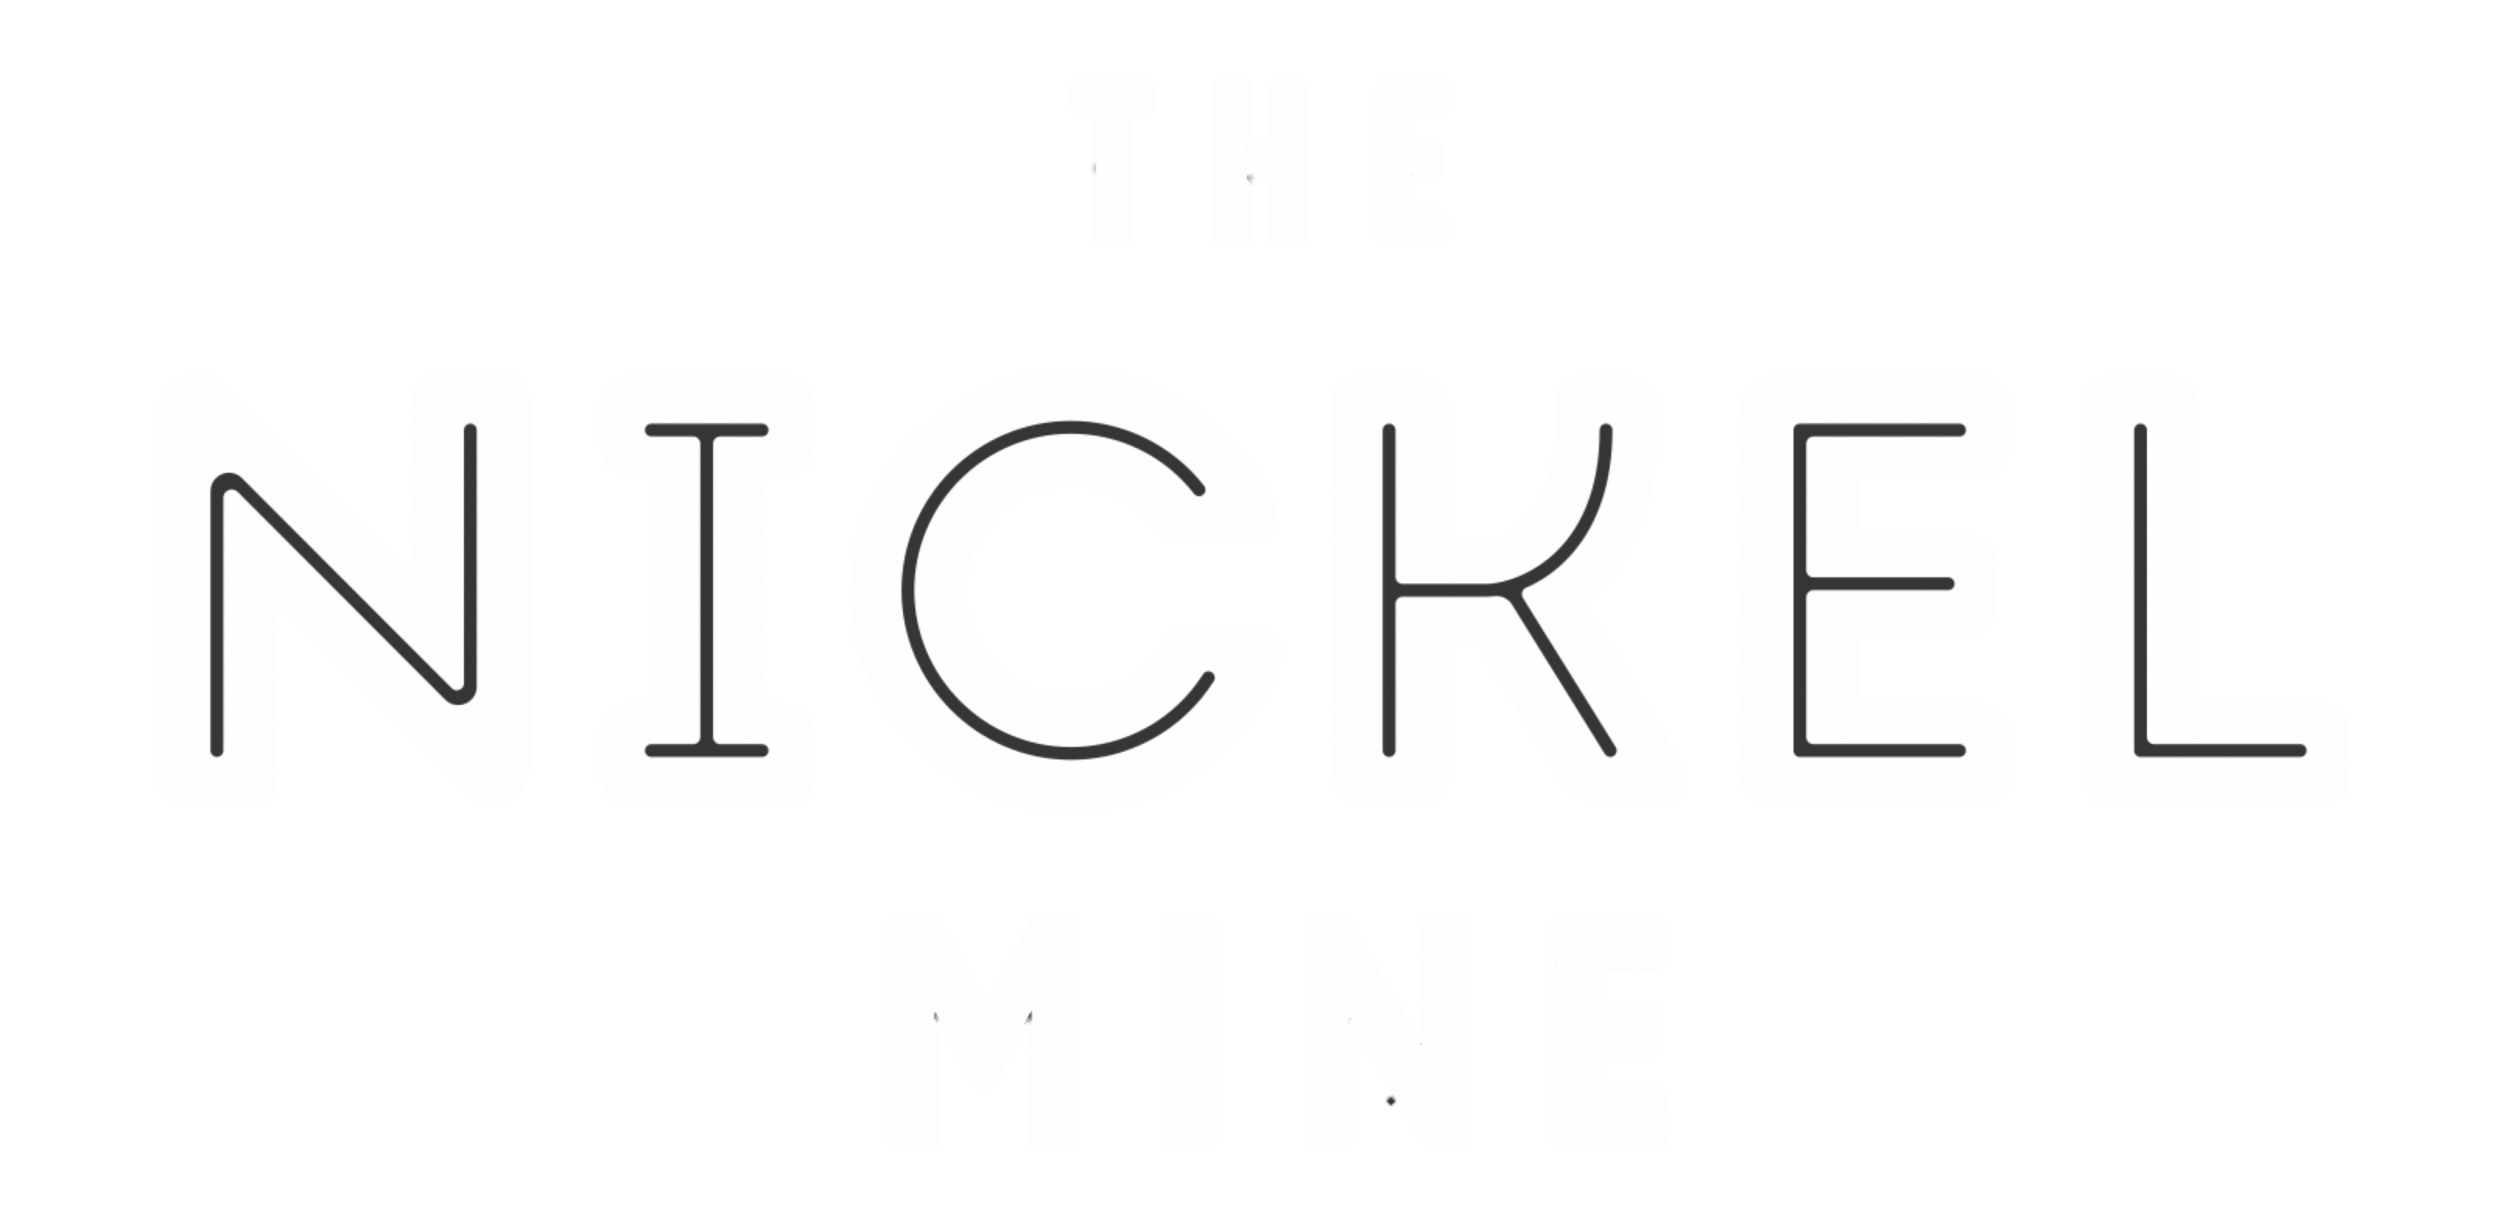 THE NICKEL MINE